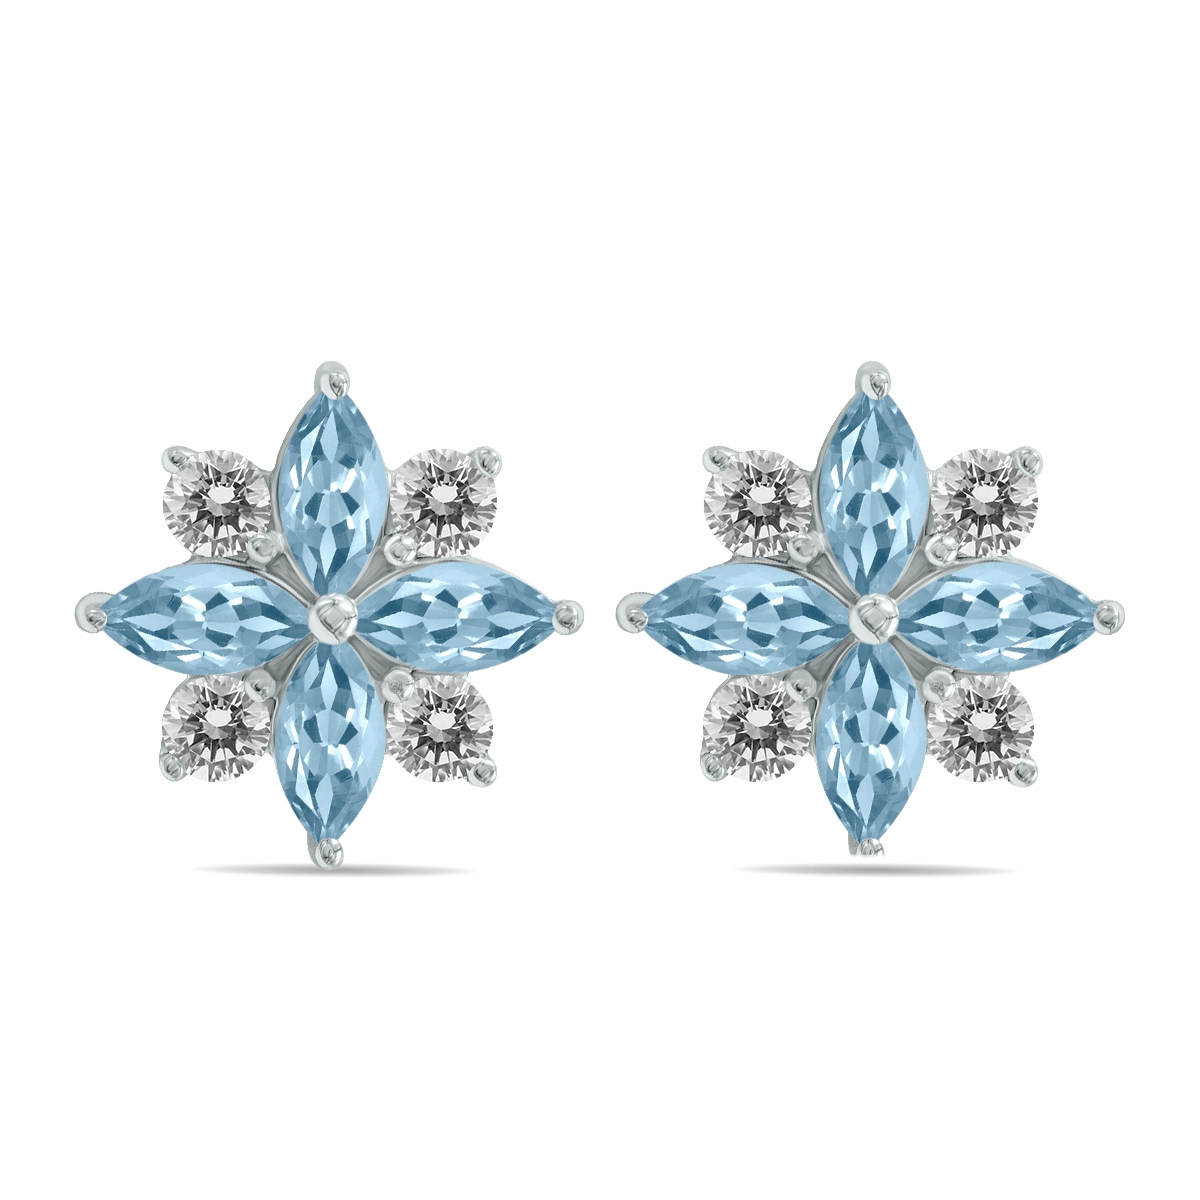 Image of 1 Carat TW Aquamarine and Diamond Flower Earrings in 10K White Gold